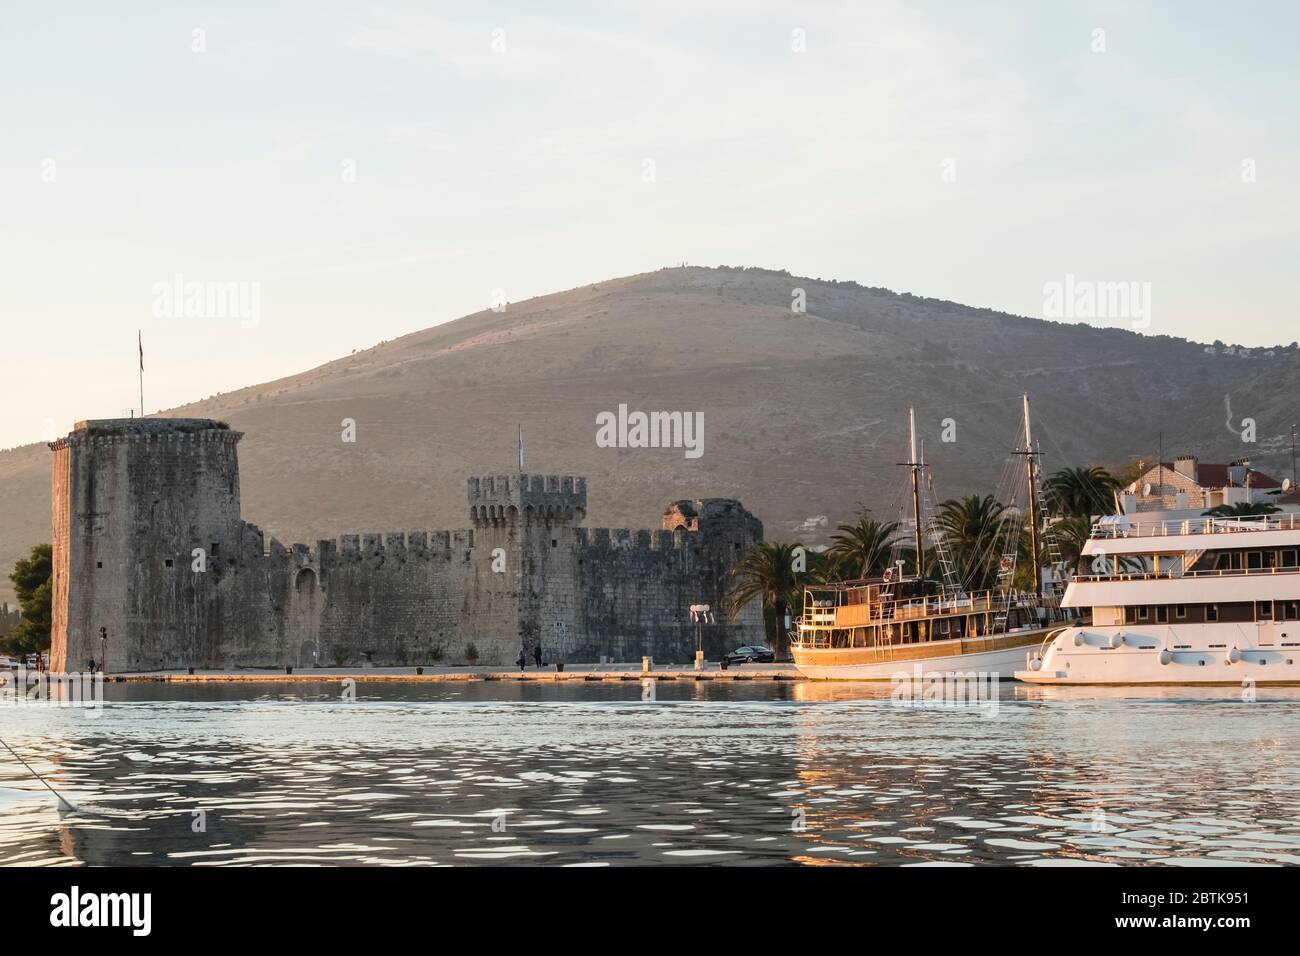 Kamerlengo Castle on the waterfront promendade, with boats docked, Trogir, Dalmatia, Croatia Stock Photo